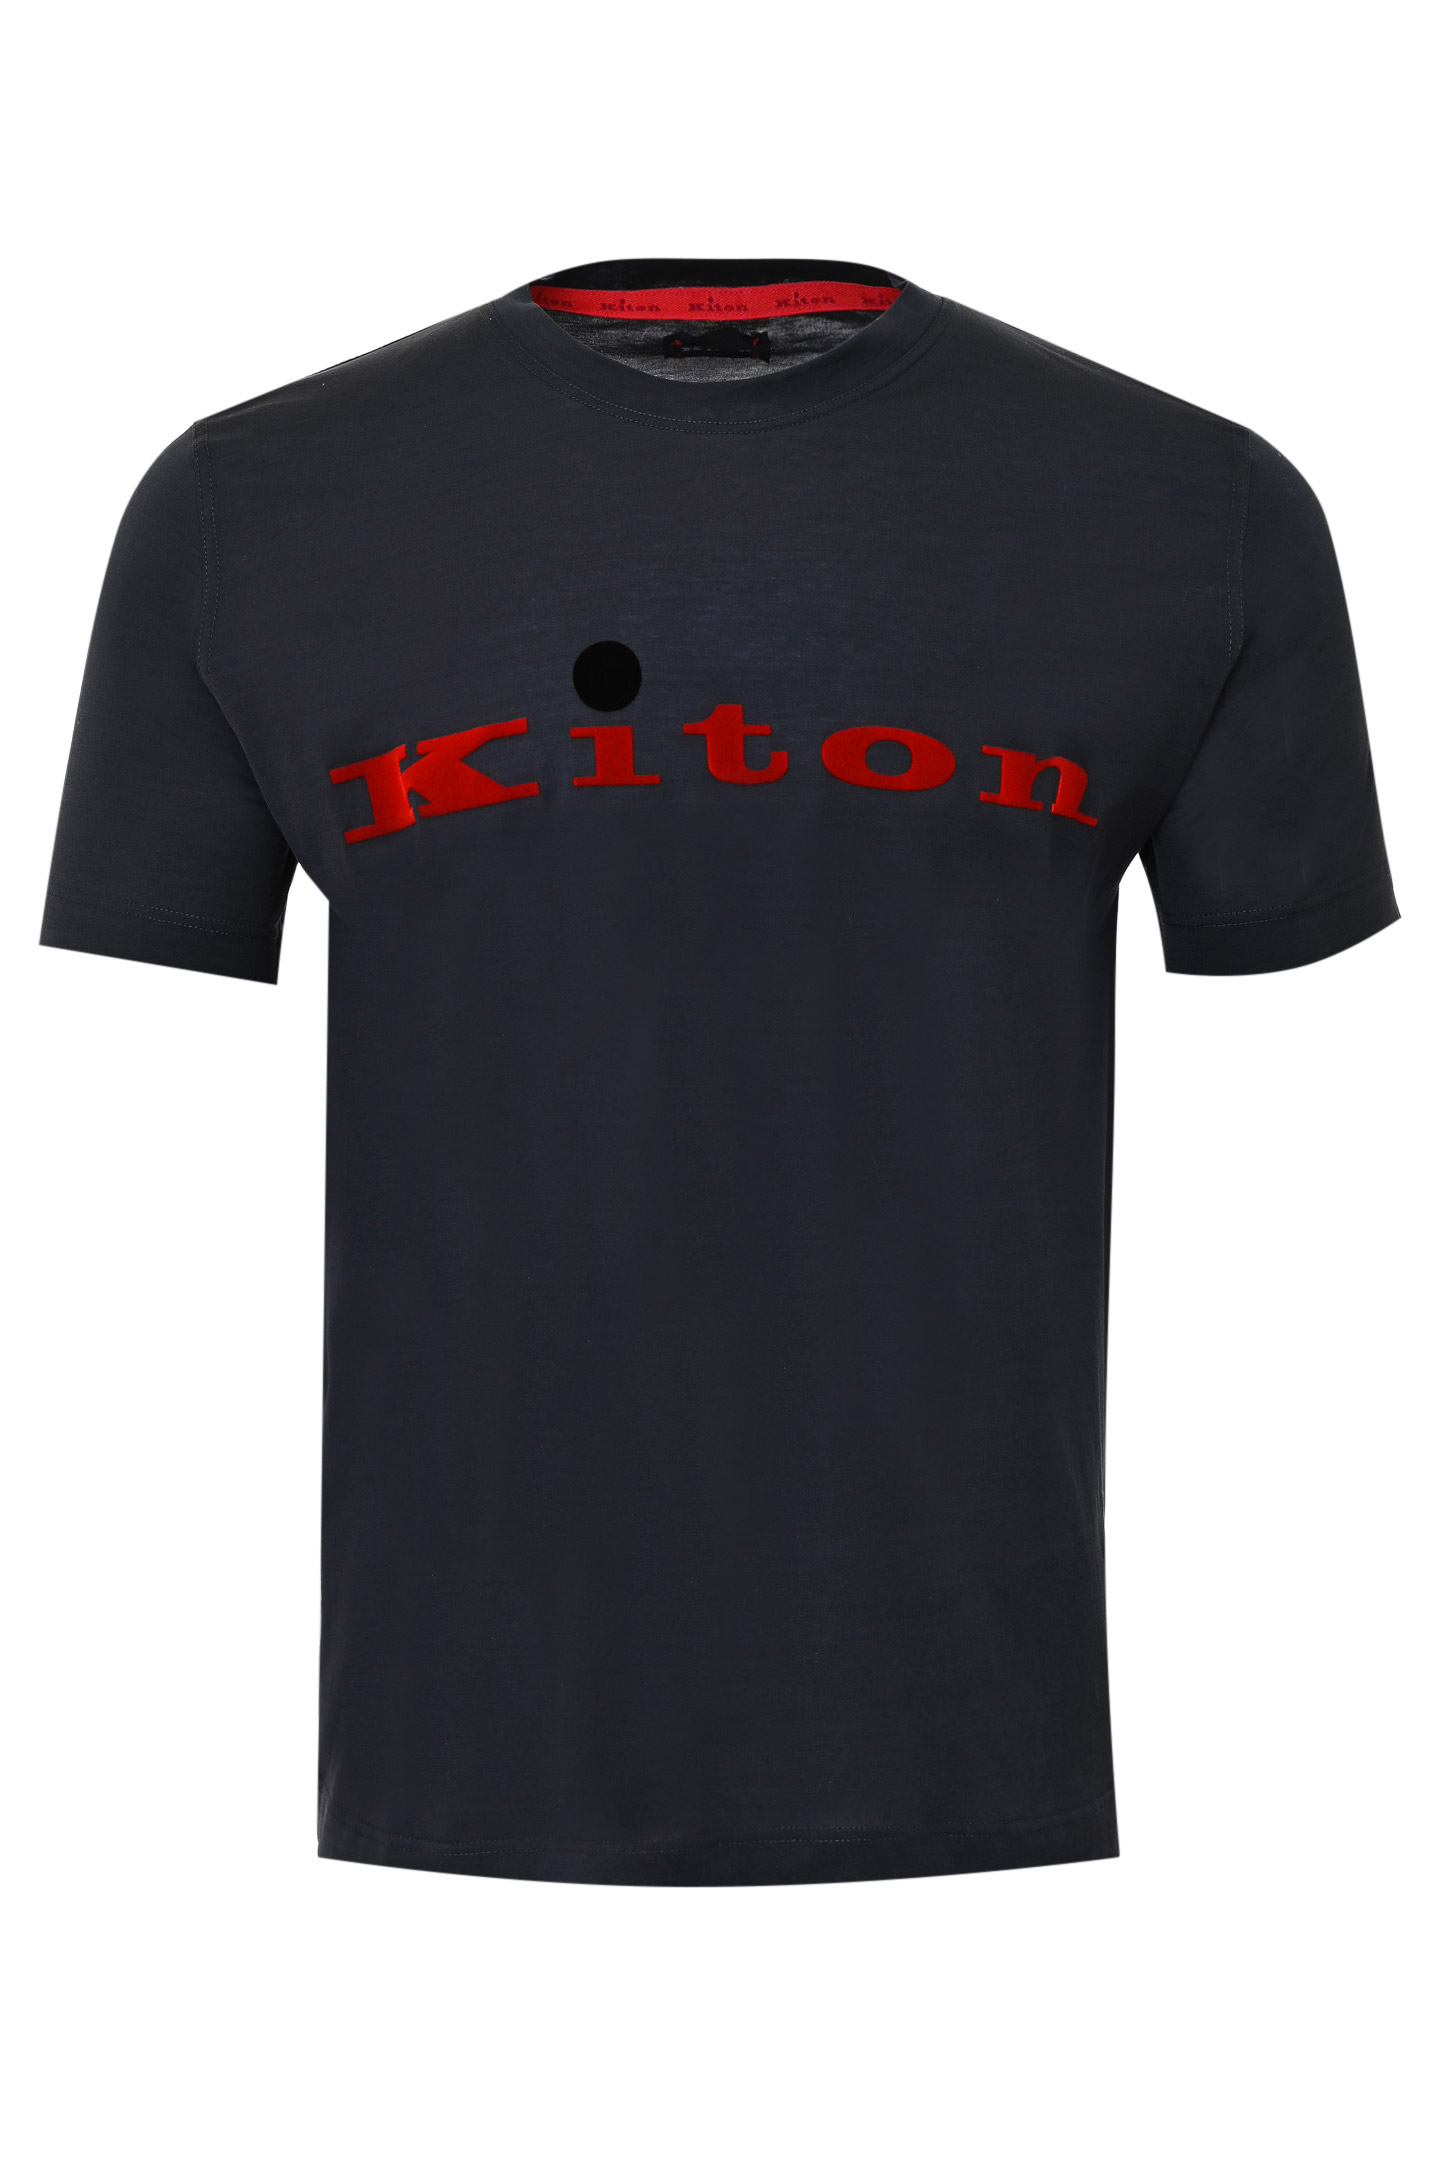 Футболка KITON UK1164W21, цвет: Серый, Мужской